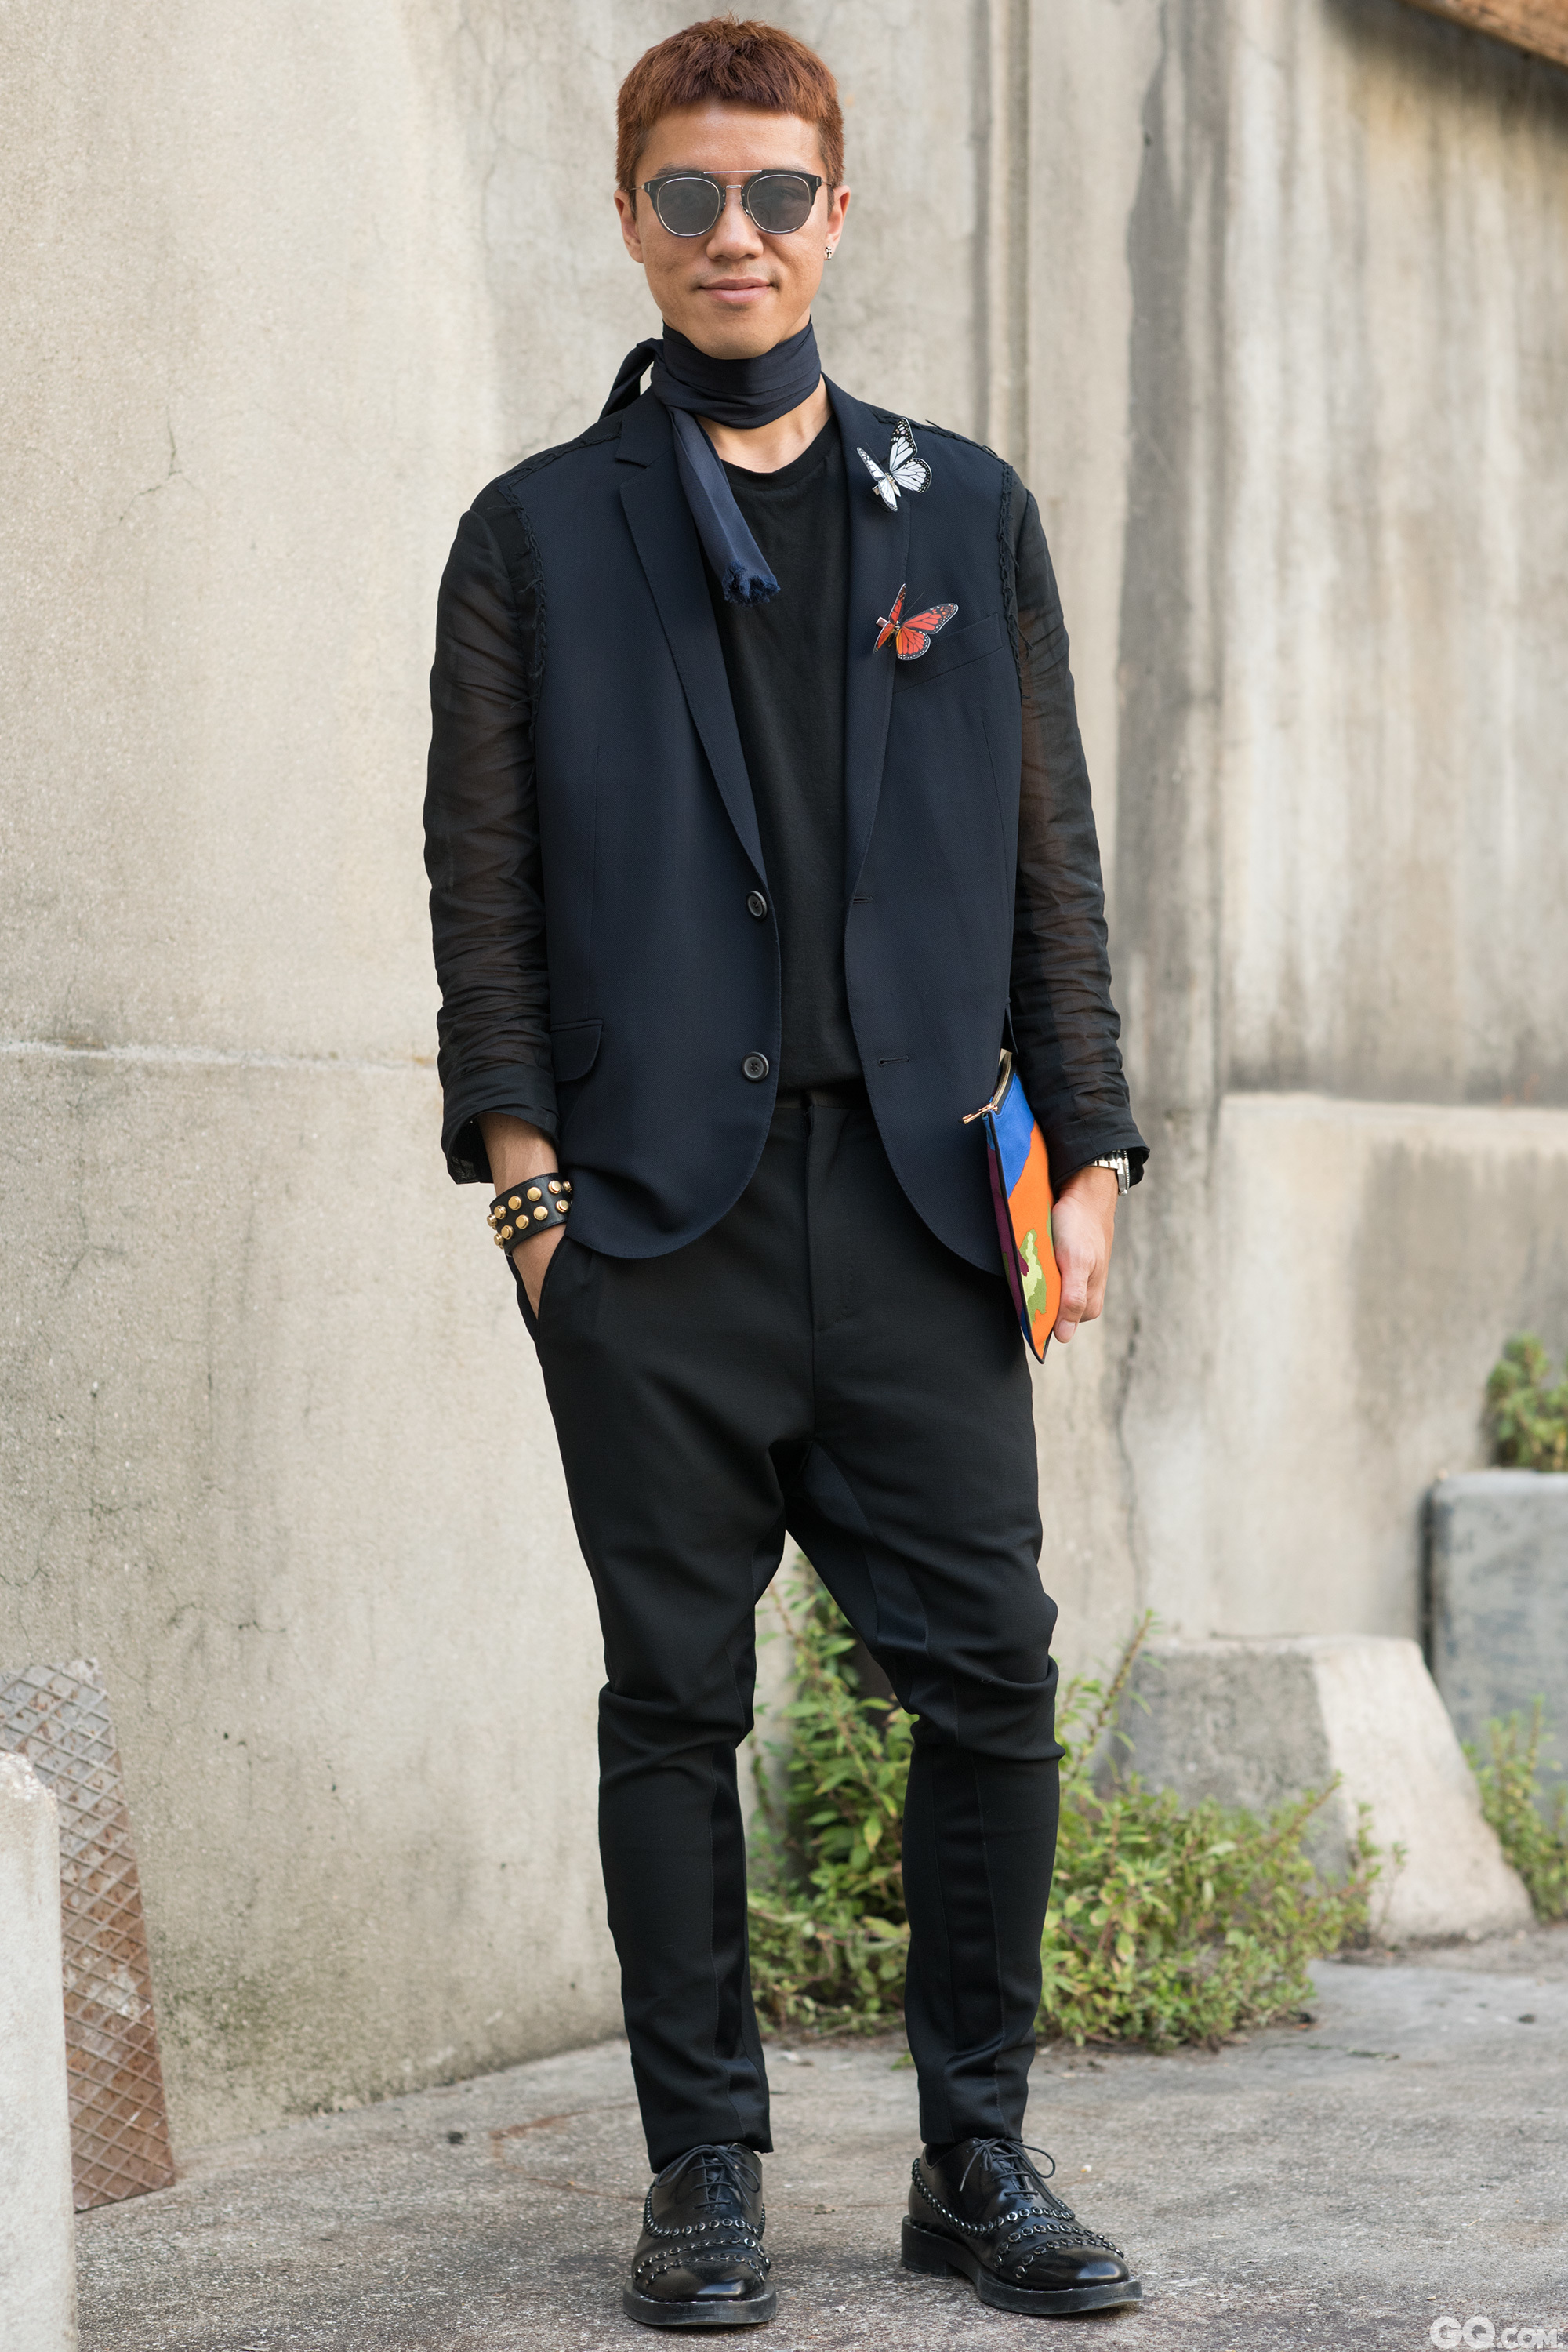 Sunglasses: Dior Homme
Jacket: Lanvin
Scarf: Lanvin
Broche: V&A museum 
Pants: Haider Ackerman 
Shoes: Lanvin
Portfolio: Loewe
Bracelet:  Saint Laurent 

Inspiration: I combined Rock&Roll elements with romanticism  
（我把摇滚元素和浪漫感觉结合了起来）